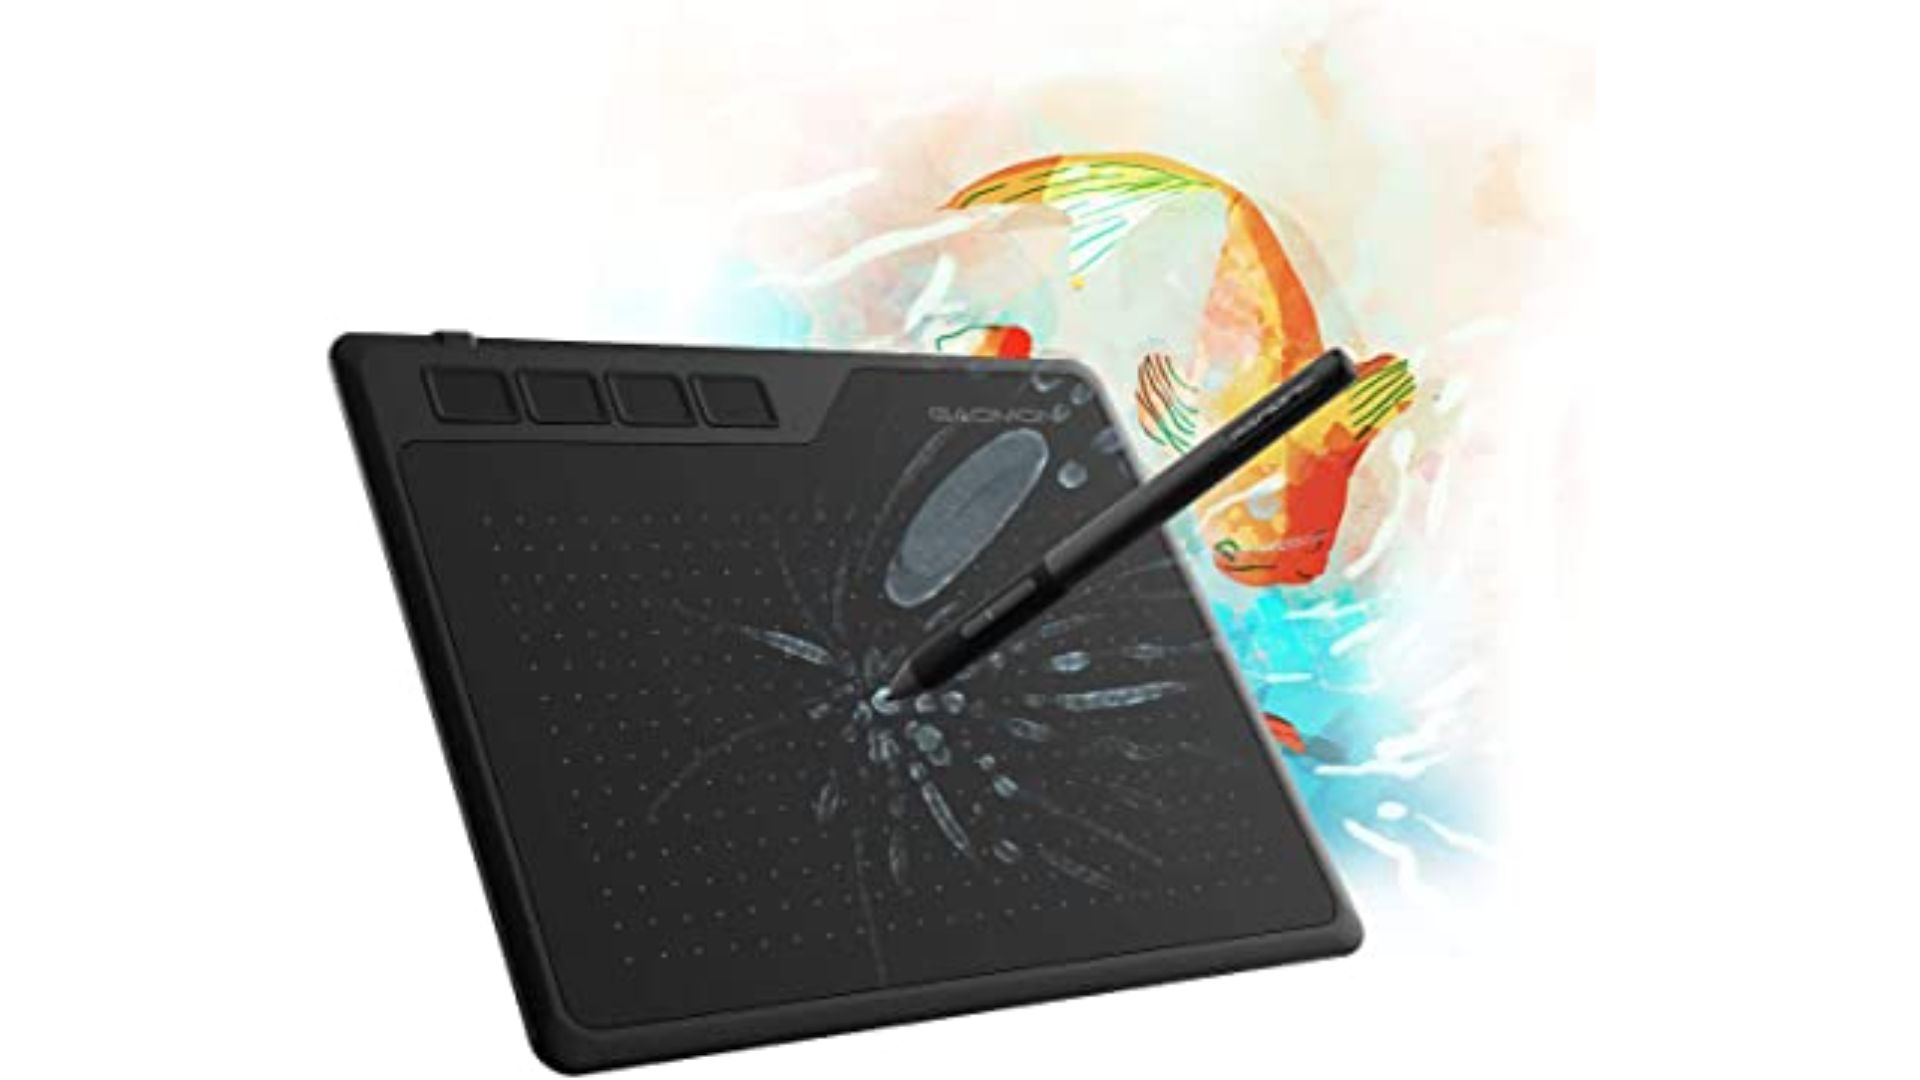 Gaomon S620 OSU Signature Graphics Tablet